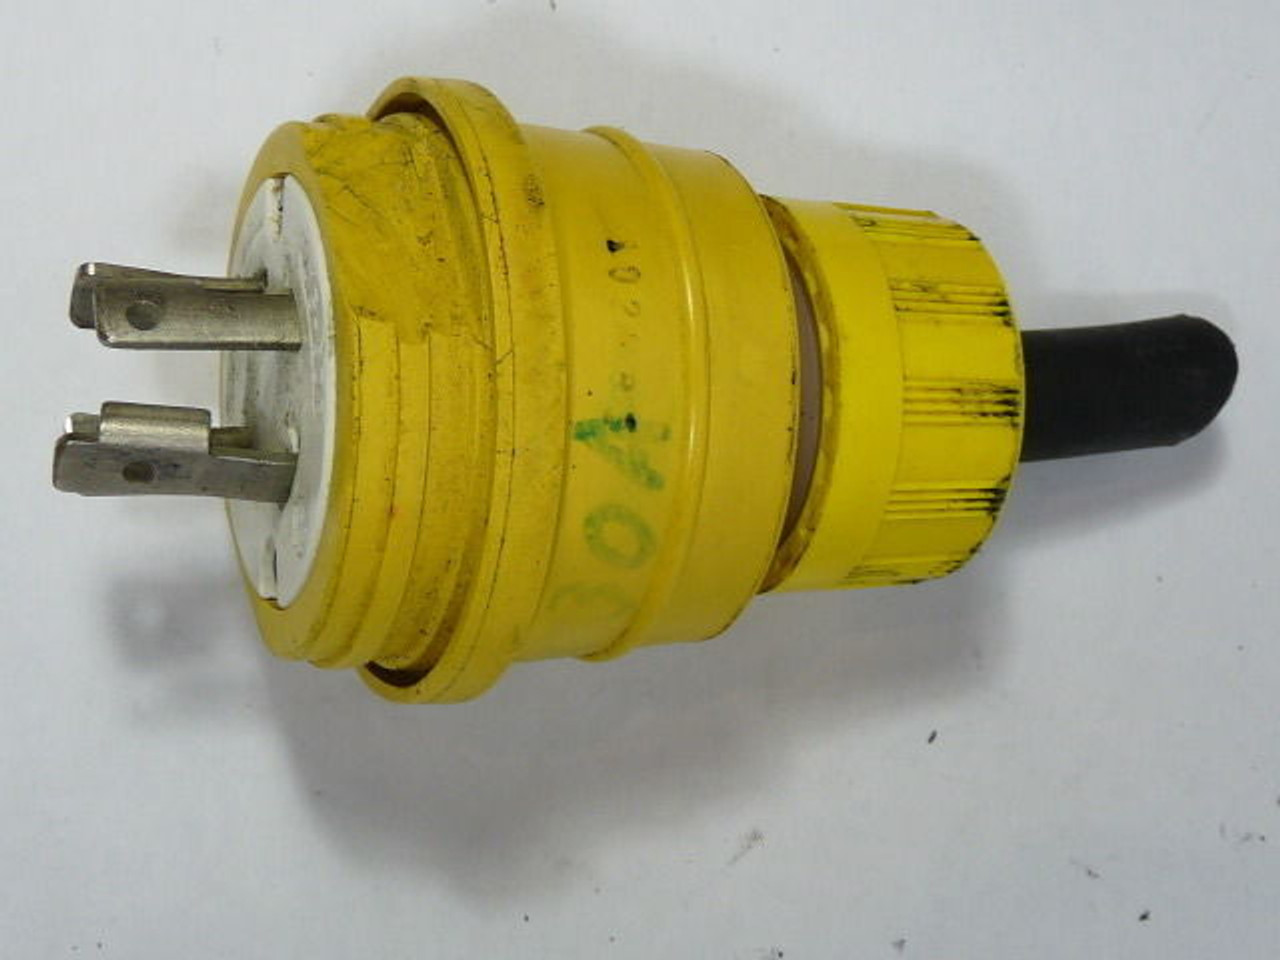 Woodhead 28W75 AC Power Plug Connector 30A 250V Watertite Series USED